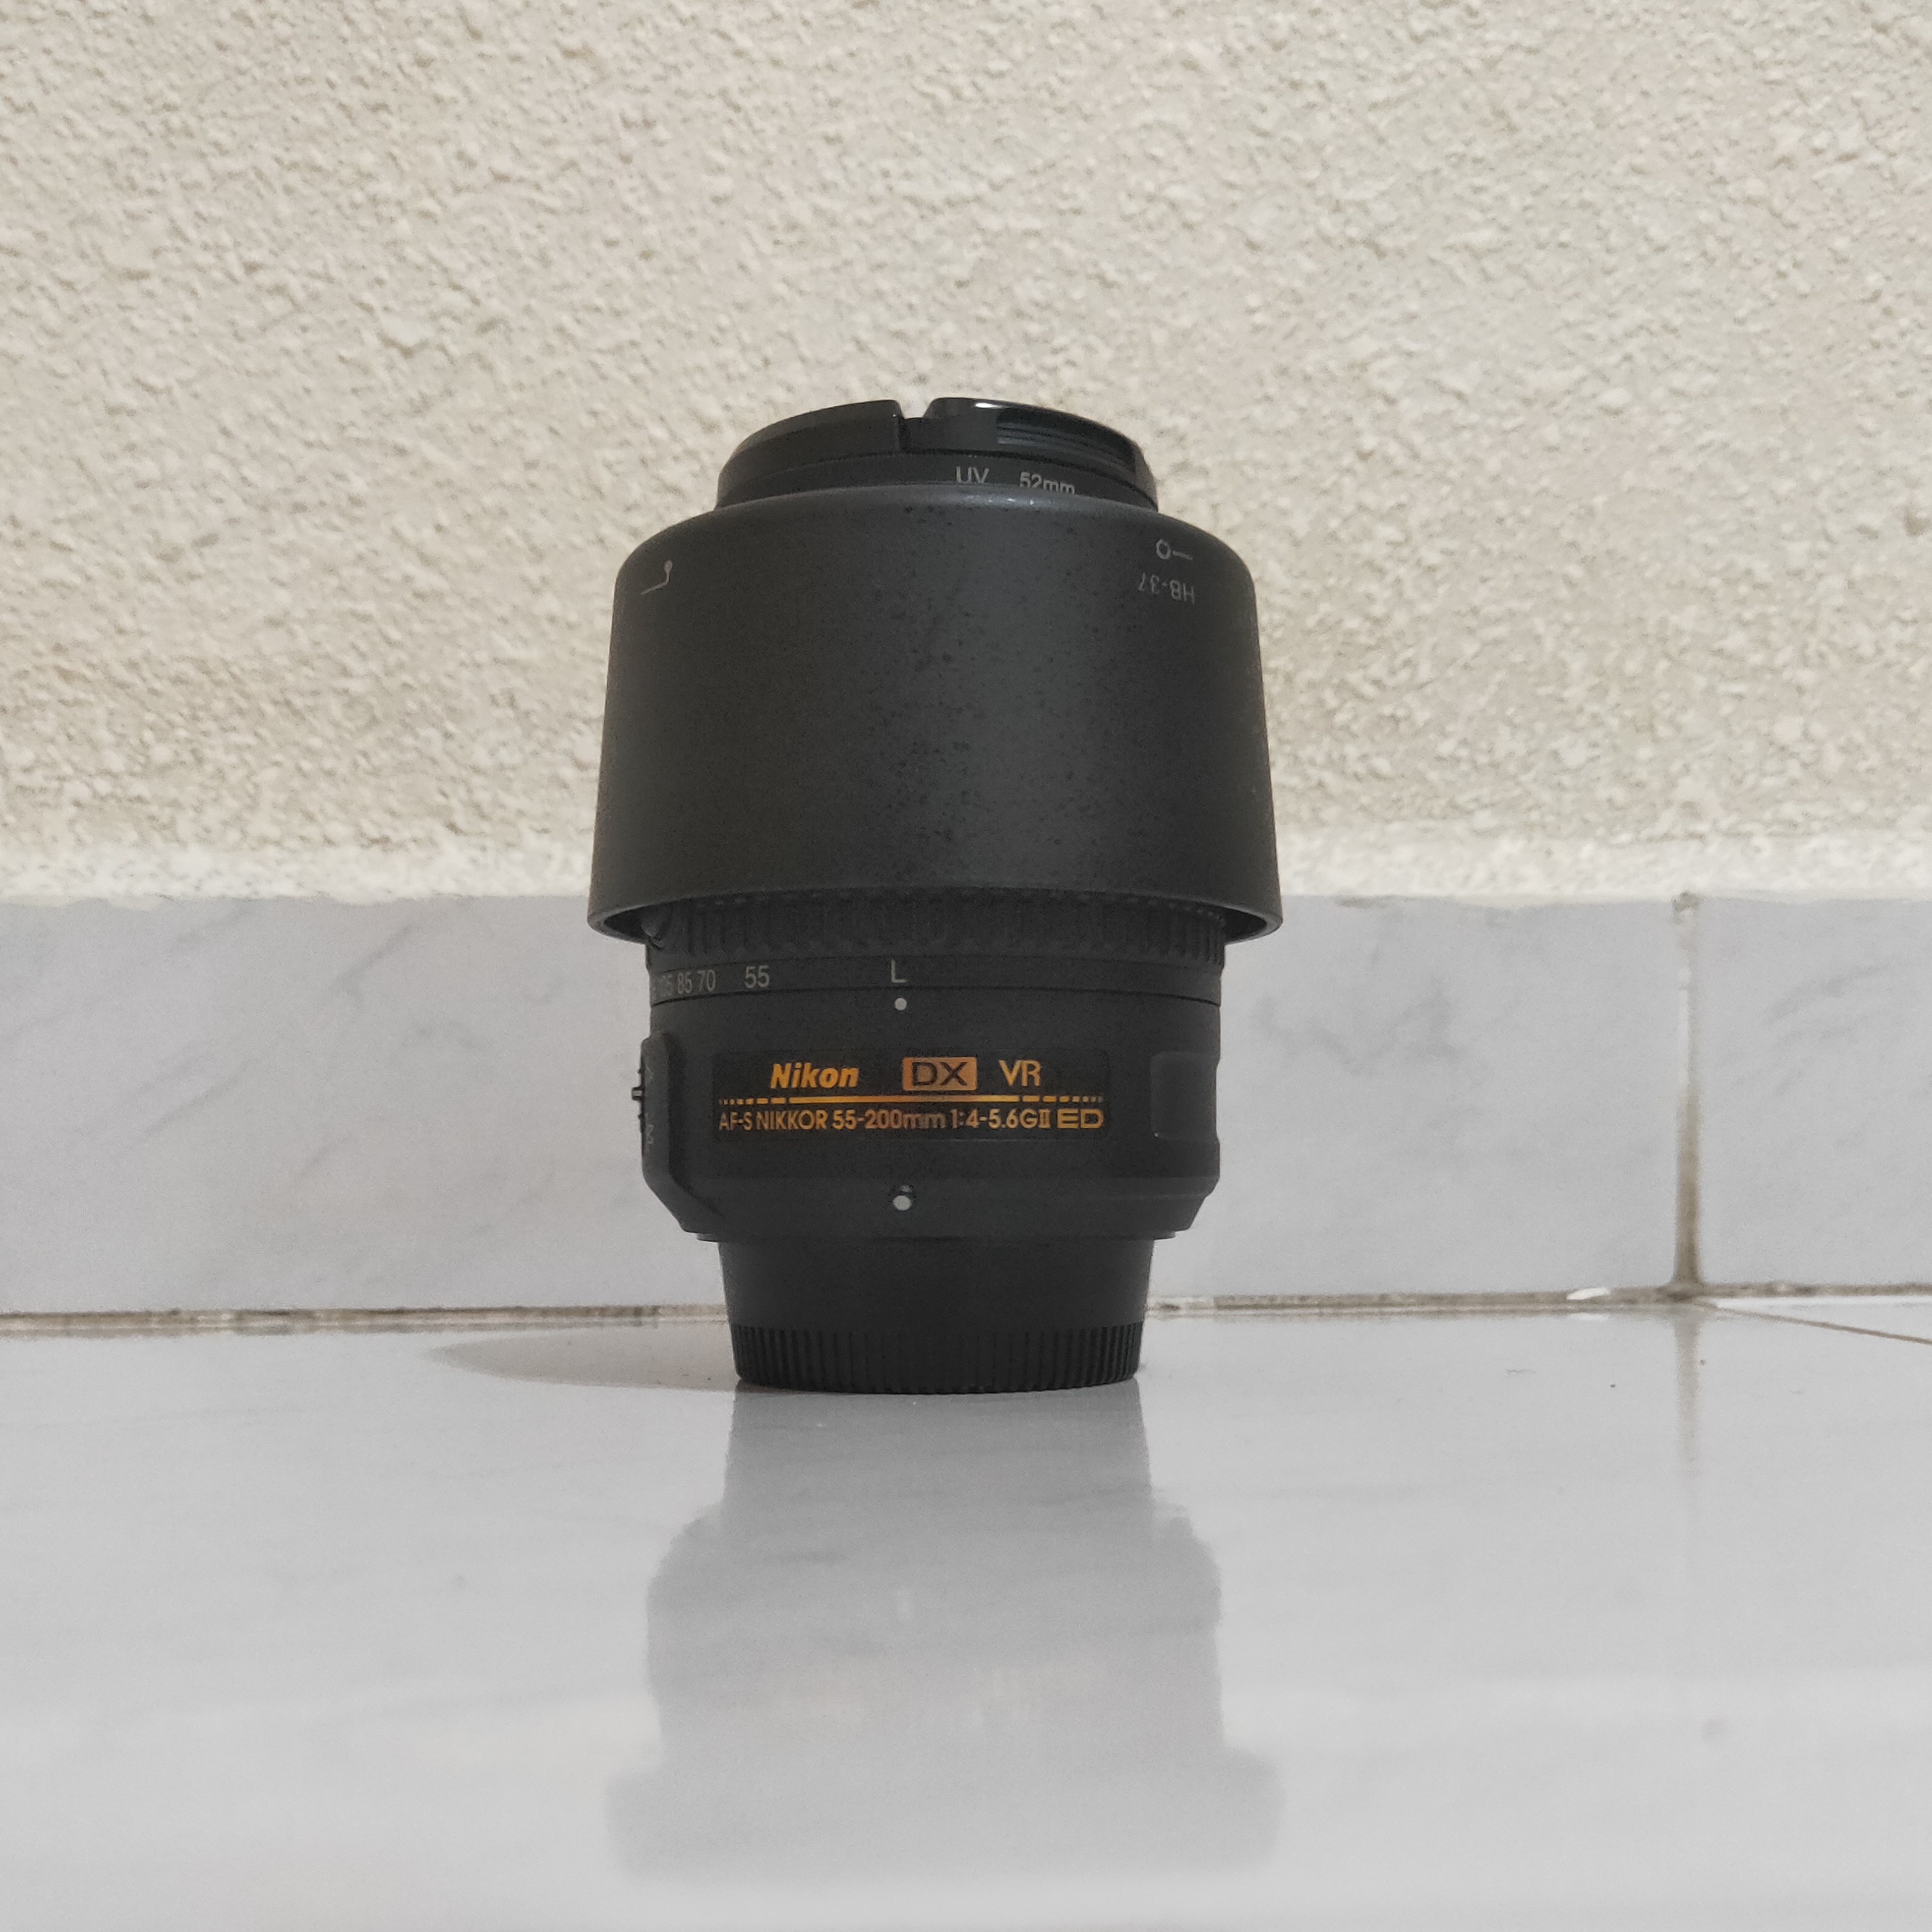 Nikon 55-200mm lens